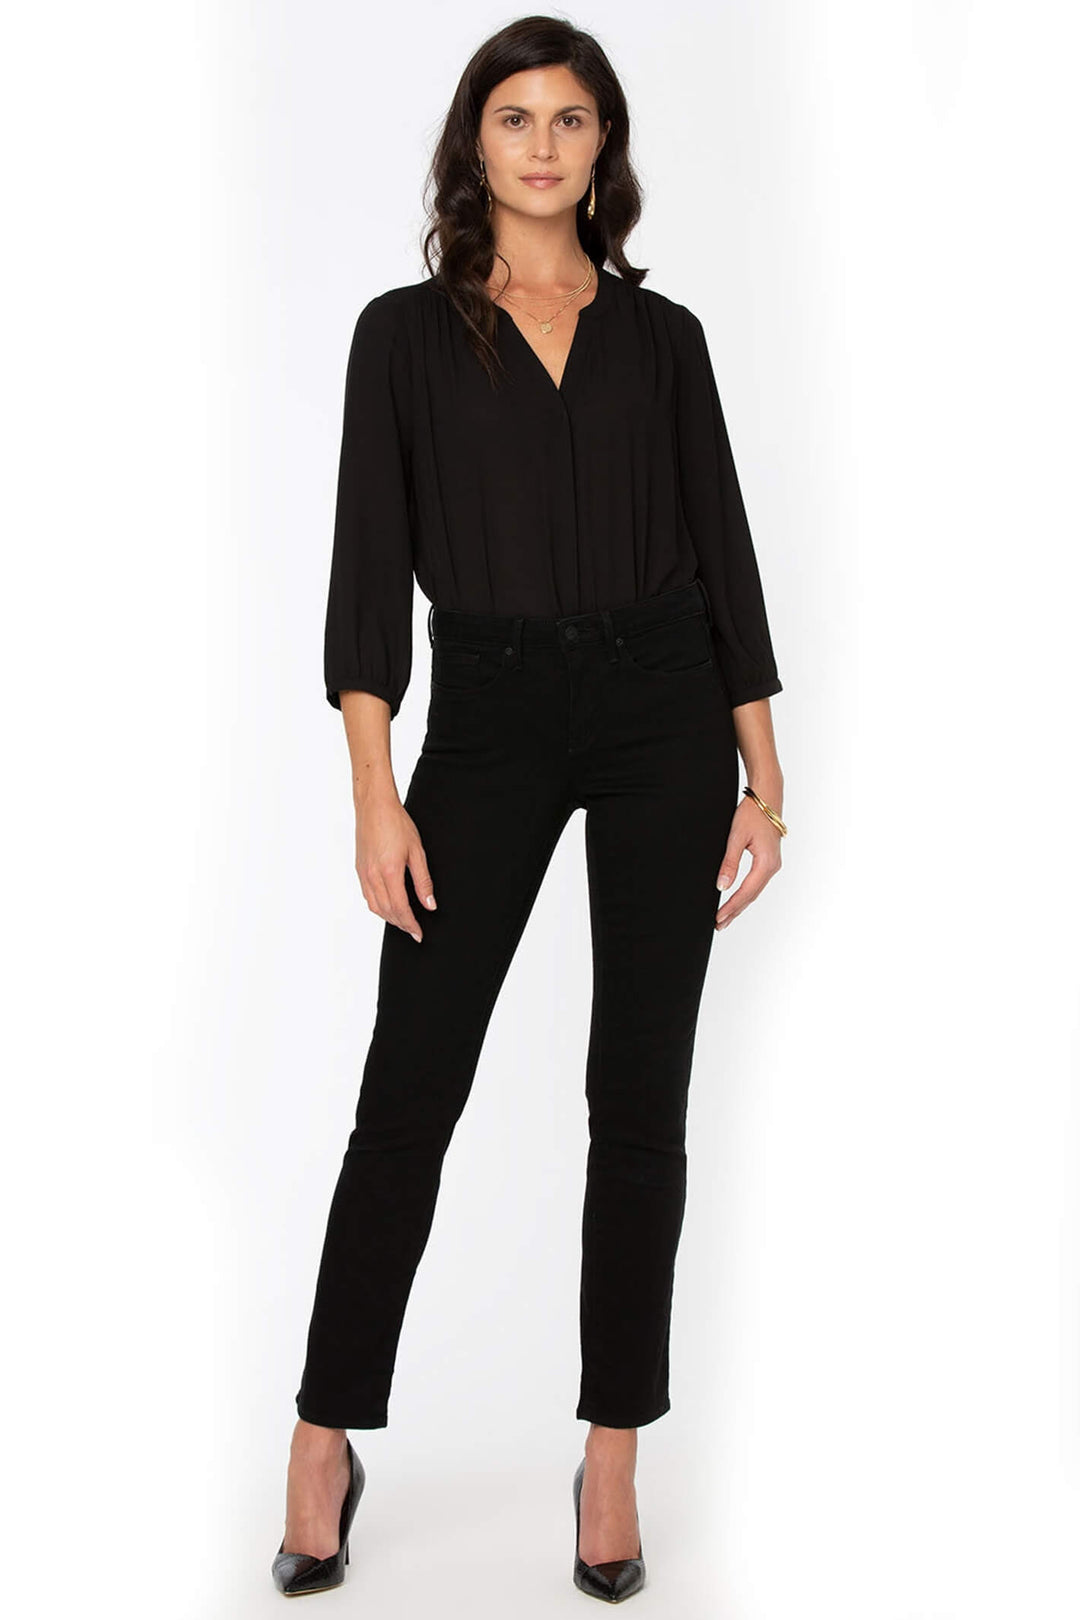 NYDJ MNBBSS8518 Sheri Slim Black Jeans - Shirley Allum Boutique